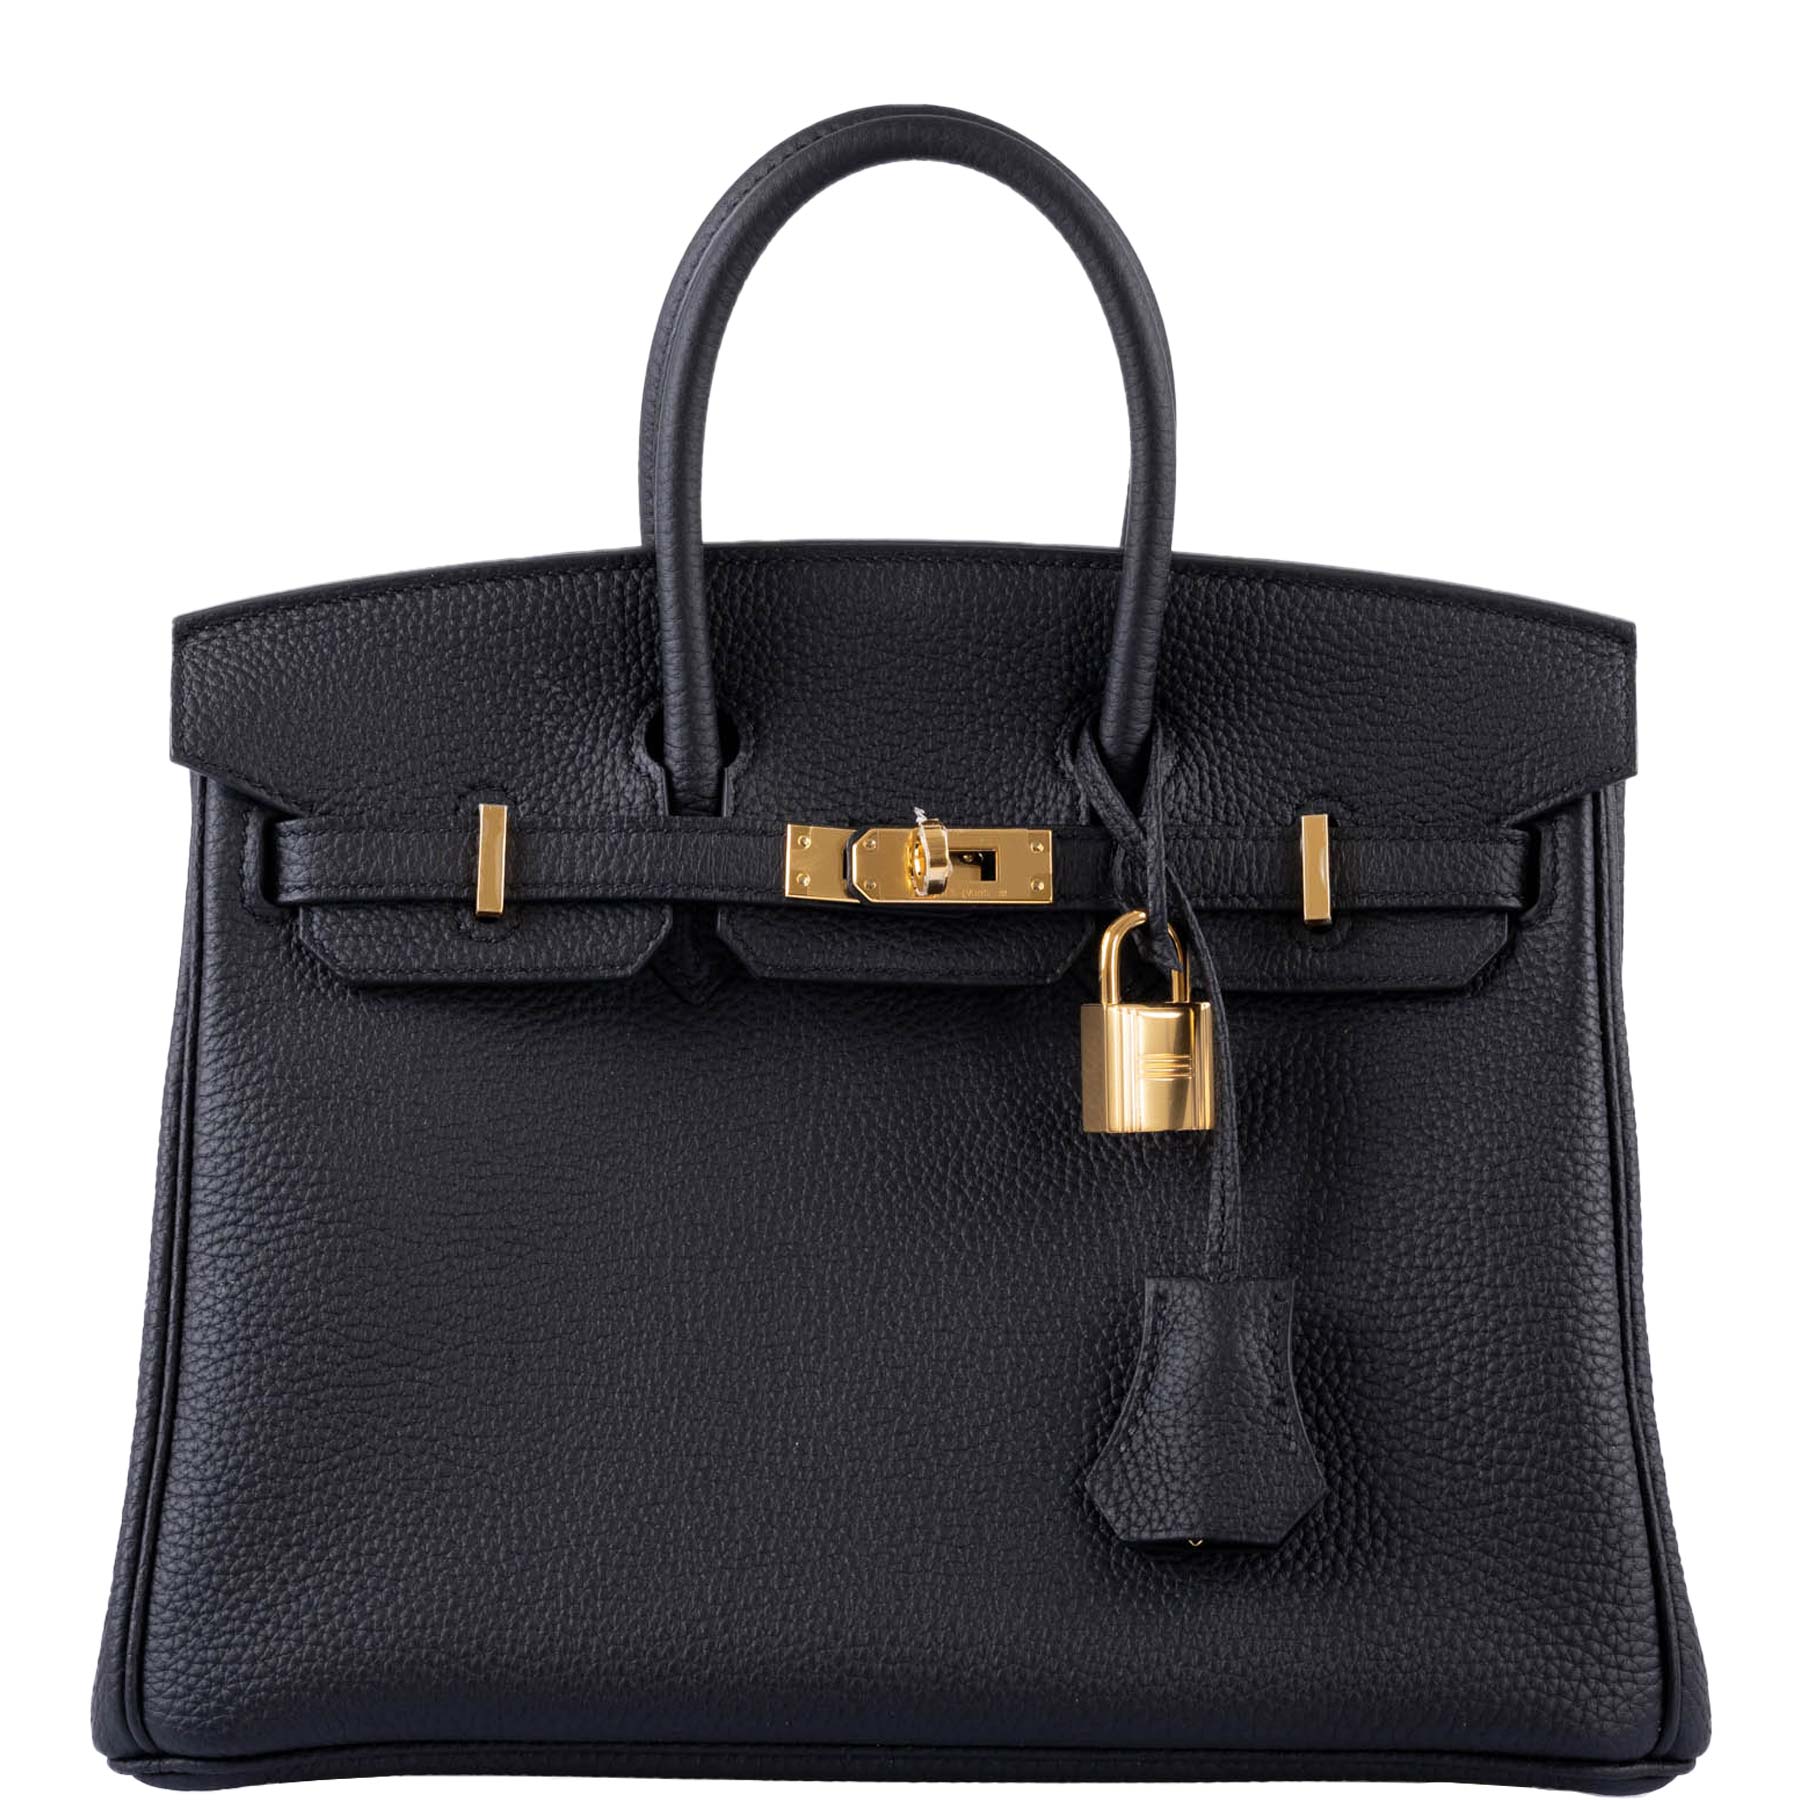 Hermès Birkin 25 Black Togo with Gold Hardware - 2020, Y – ZAK BAGS ©️